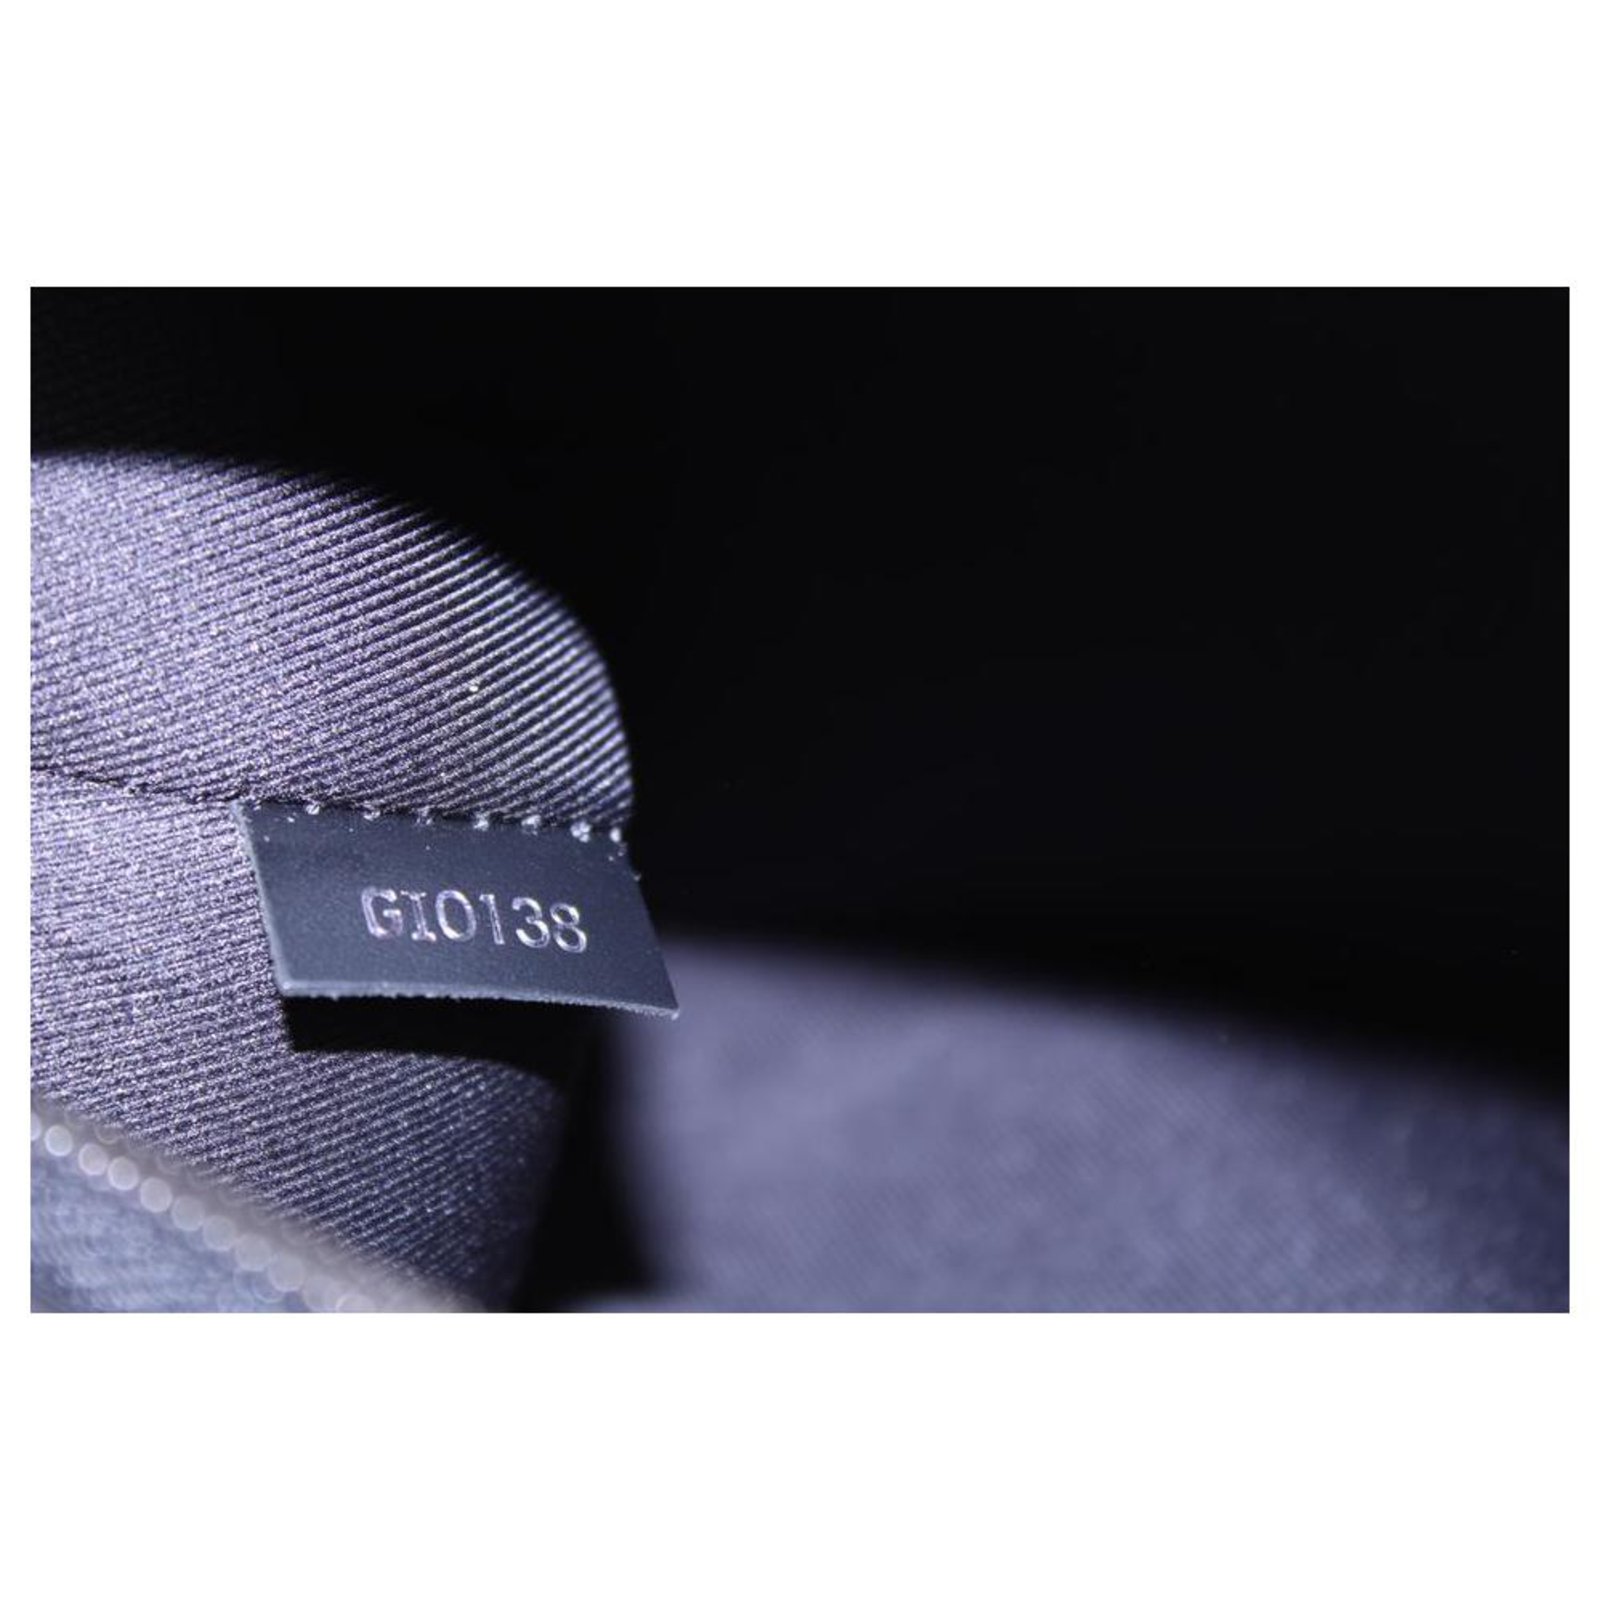 Louis Vuitton Ultra Rare Monogram Eclipse Fragment Cabas Light Pochette  859413